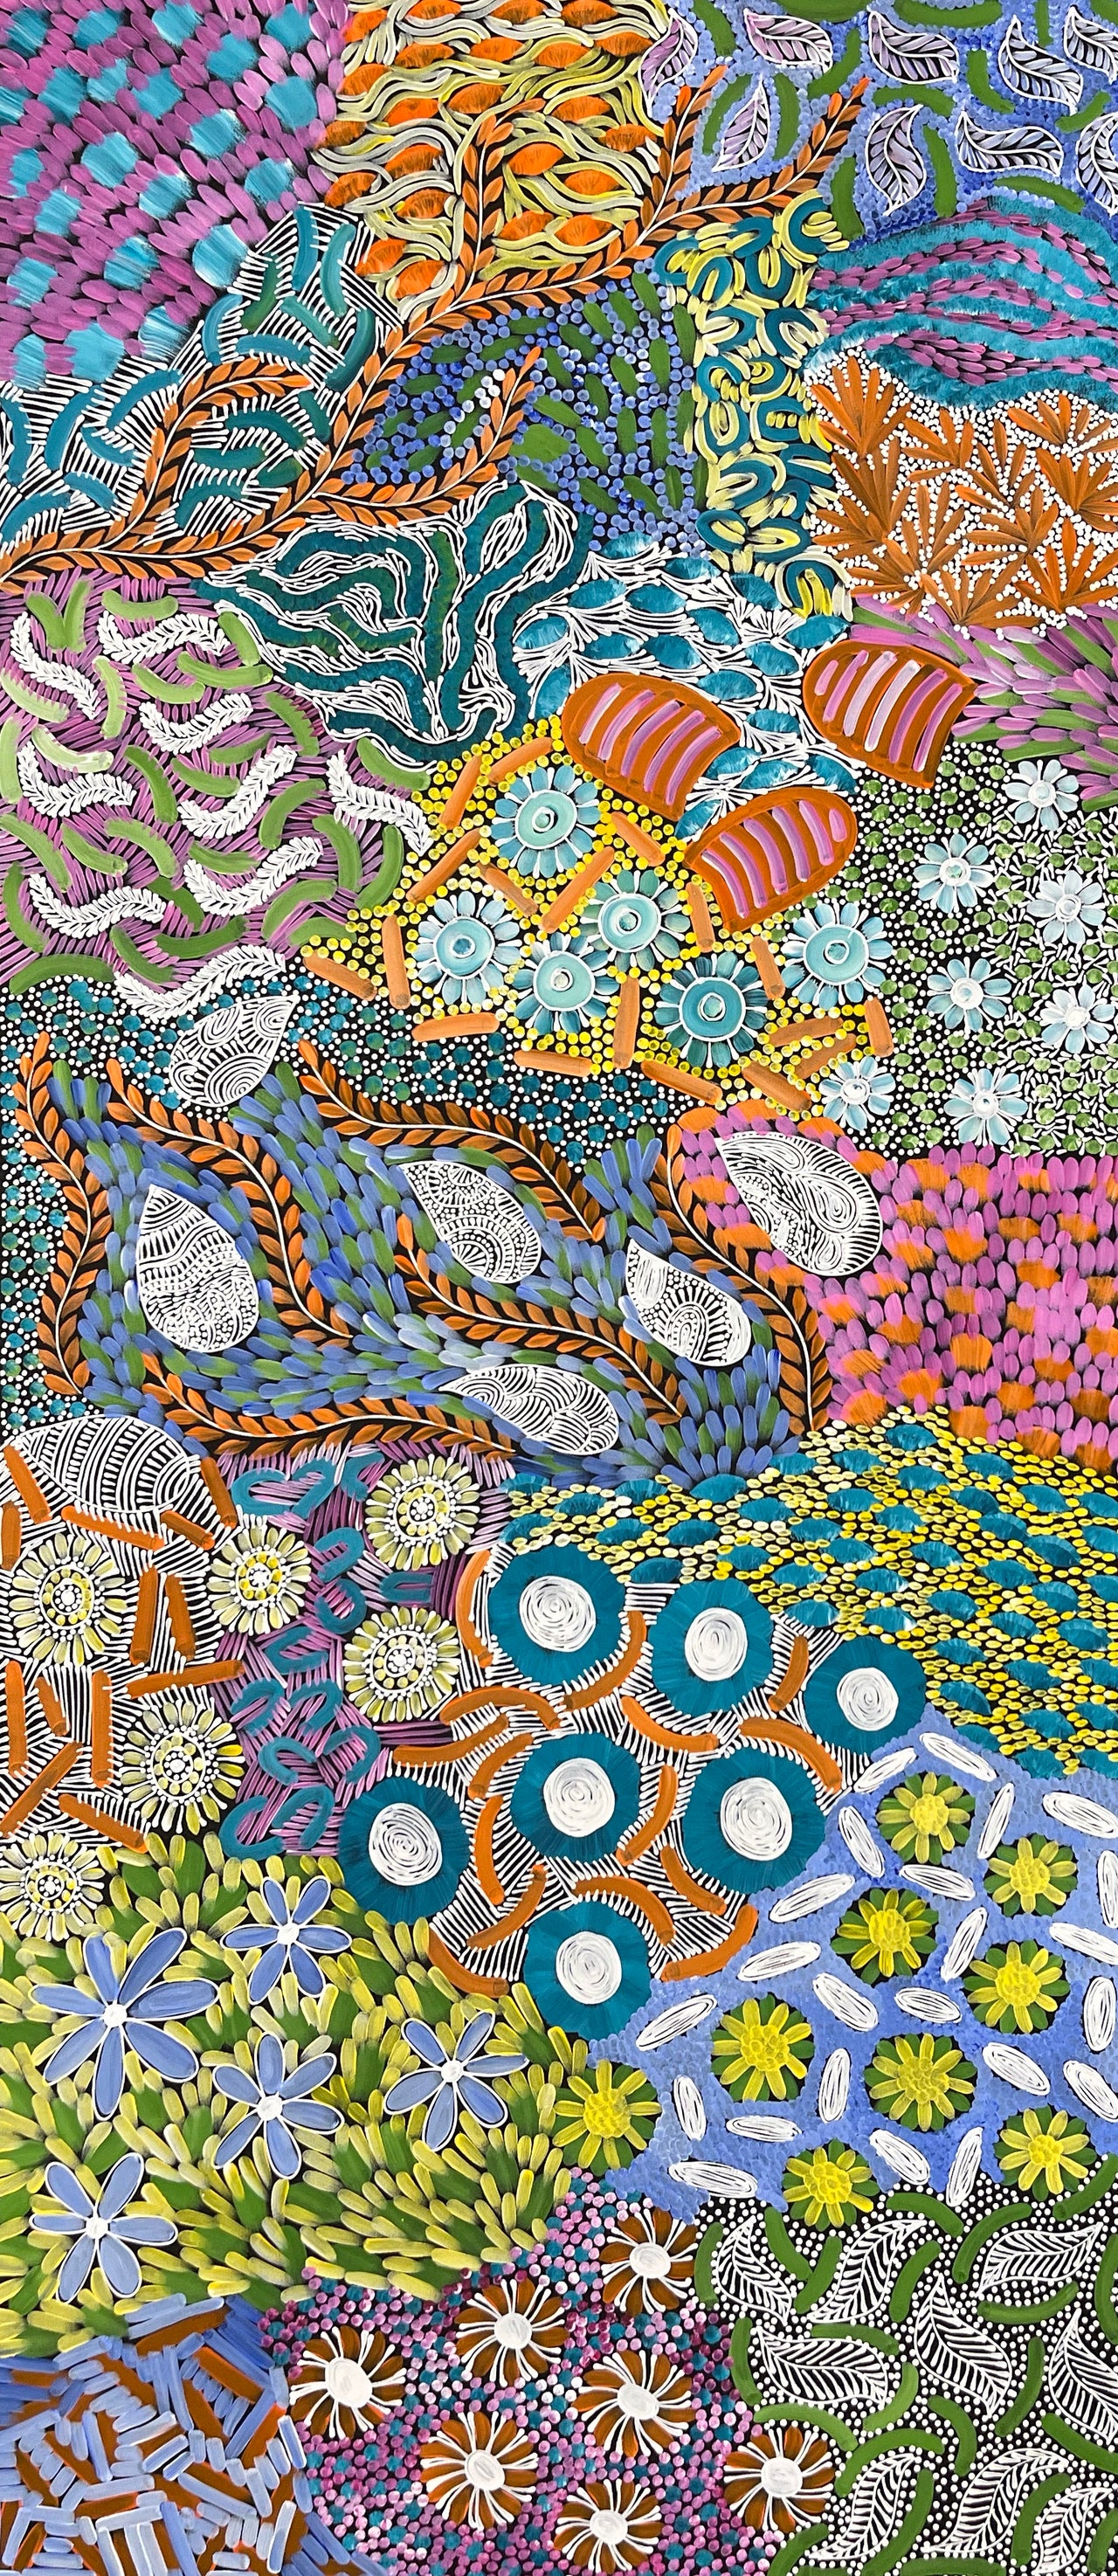 Karen Bird, "My Country" 2100 x 880 Aboriginal Art